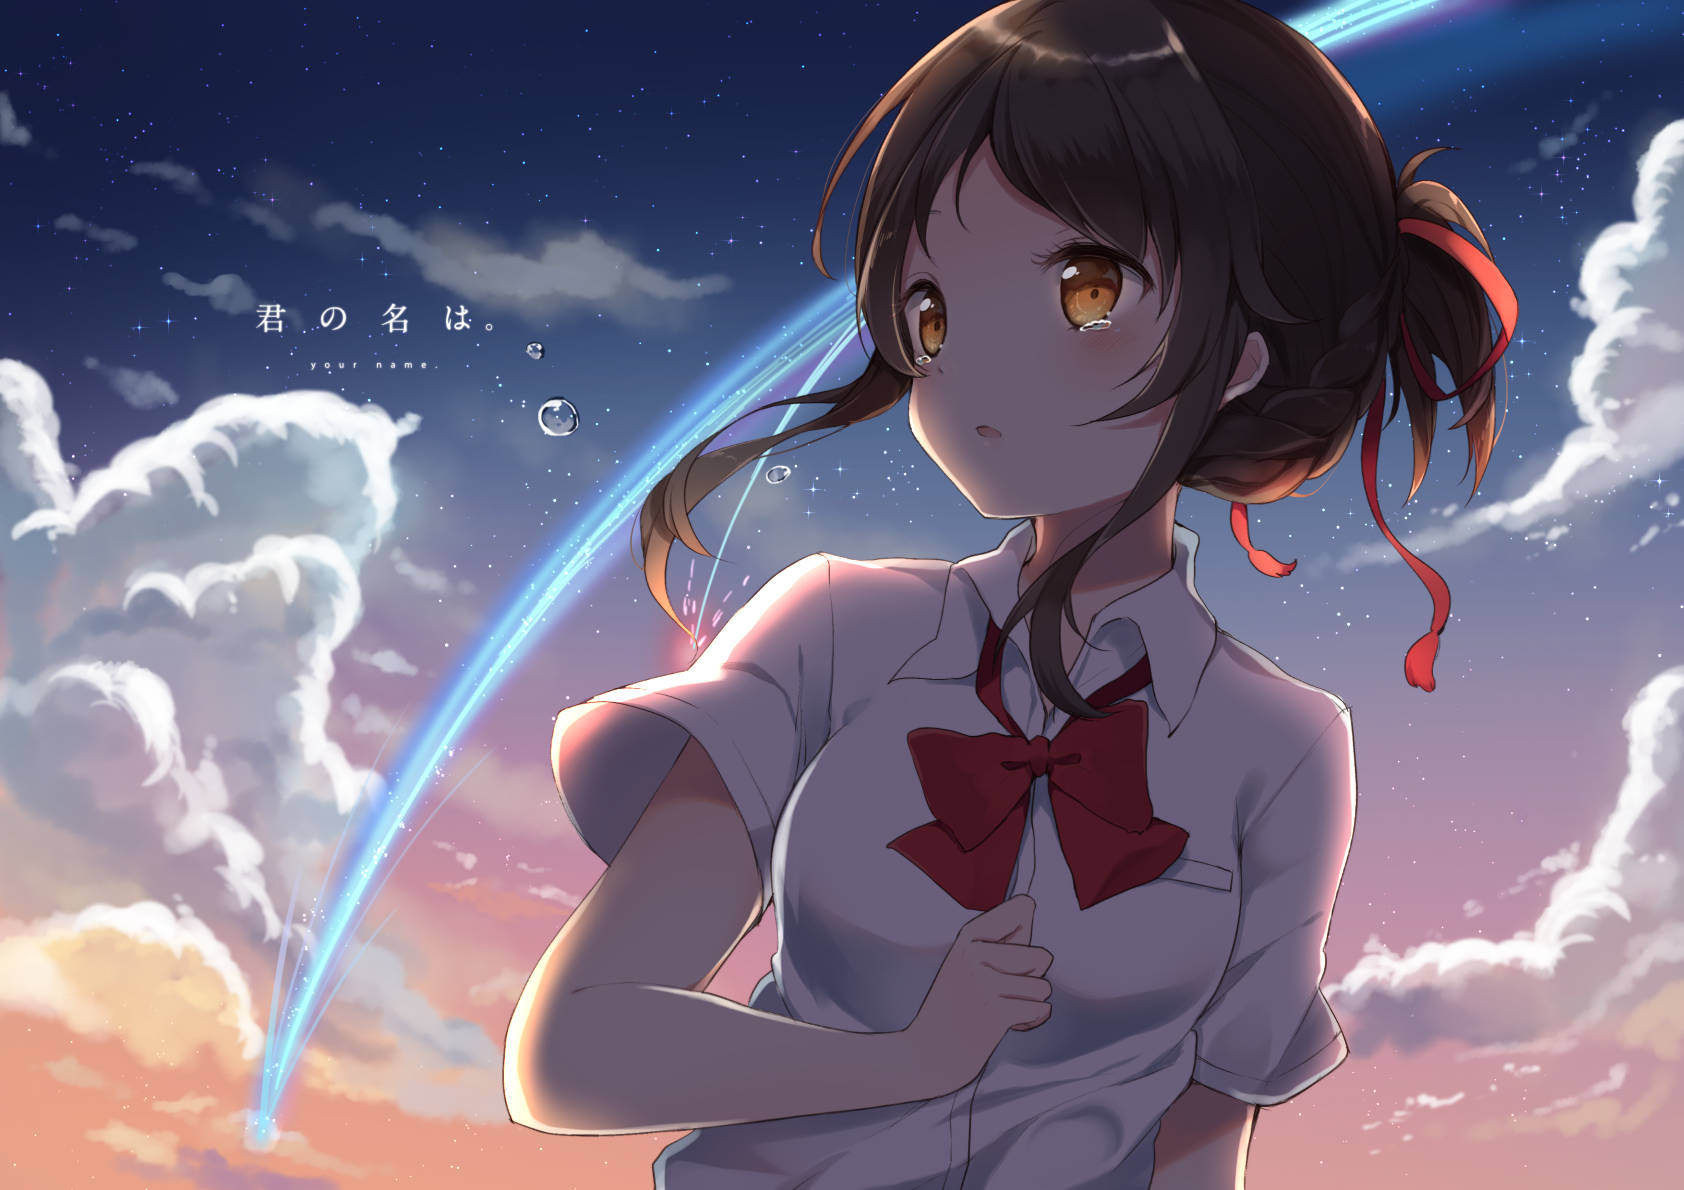 Kimi no na wa, mitsuha miyamizu, clouds, scenic, Anime, HD wallpaper